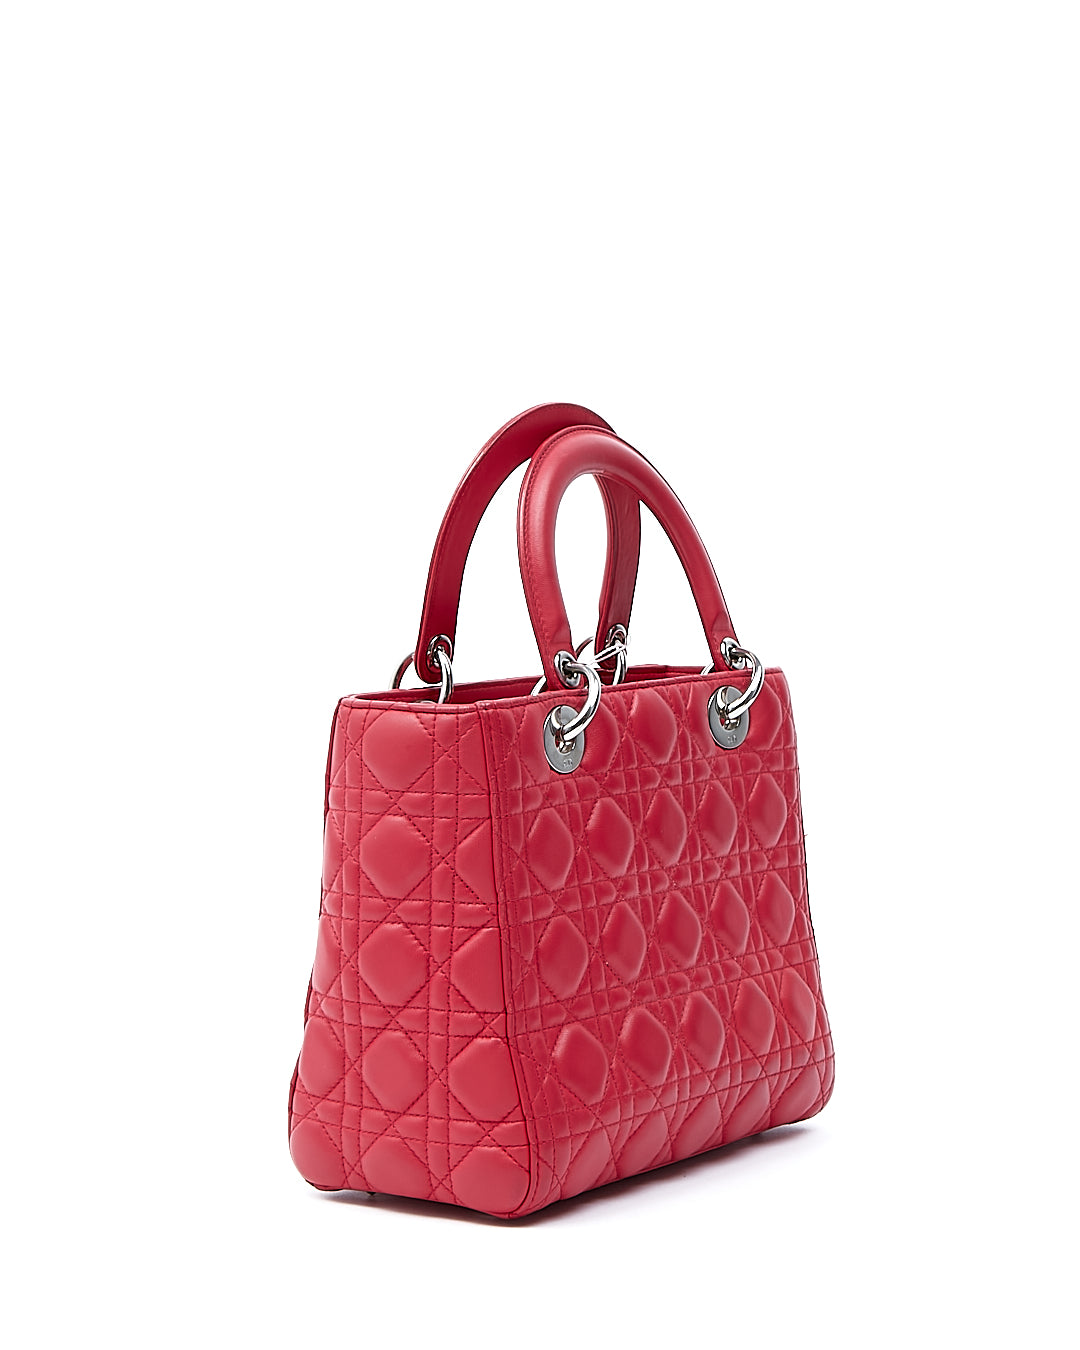 Dior Cherry Red Leather Cannage Medium Lady Dior Bag